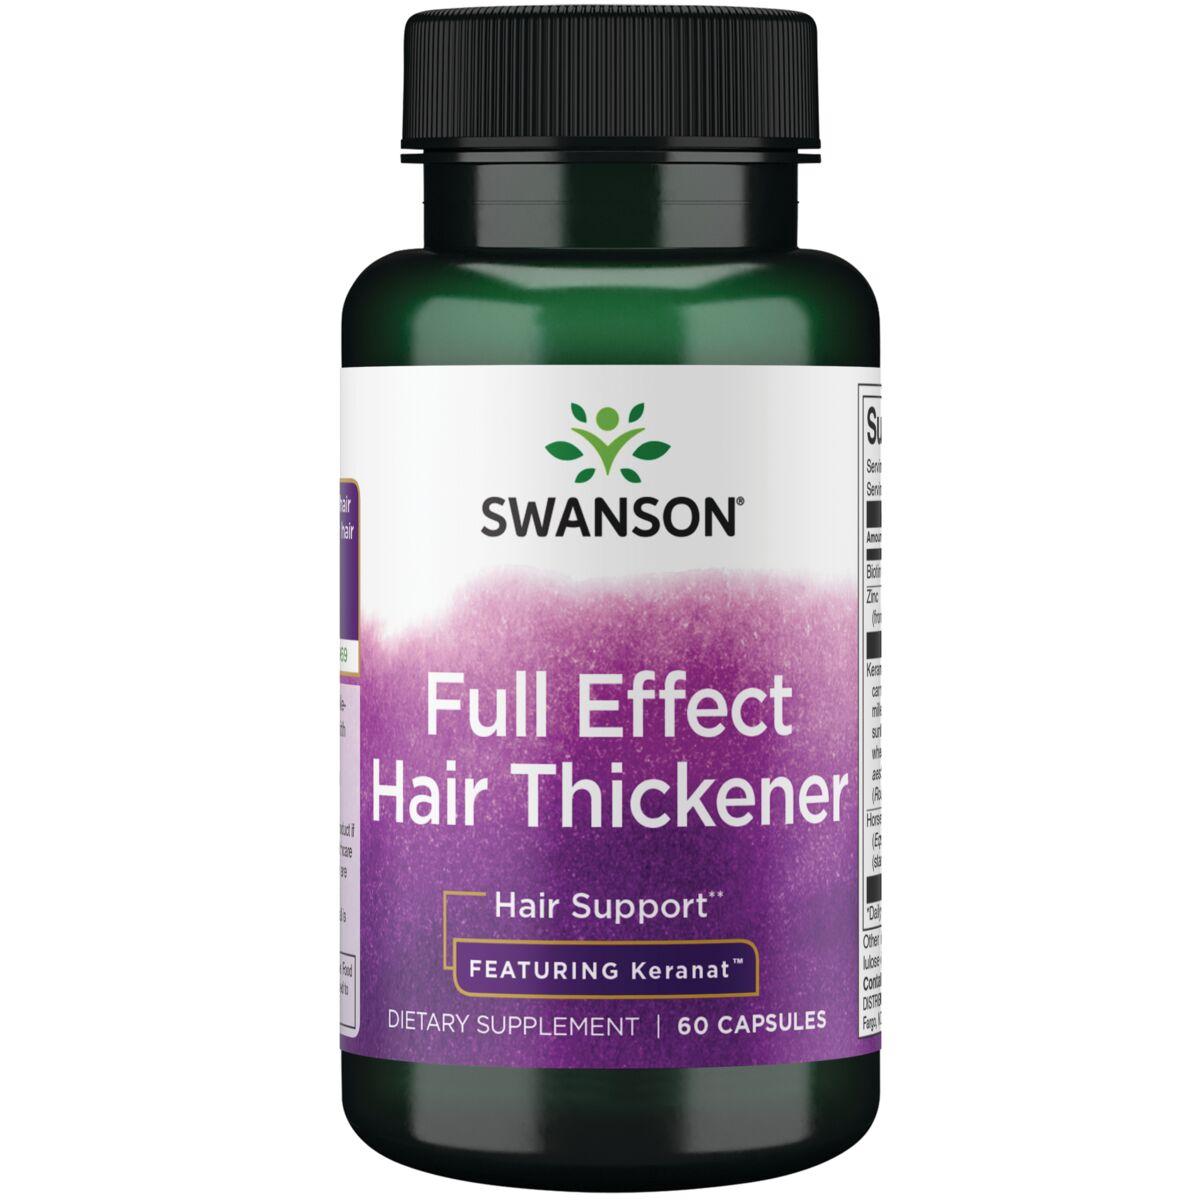 Swanson Ultra Full Effect Hair Growth Treatment Thickener - Featuring Keranat Vitamin | 60 Caps